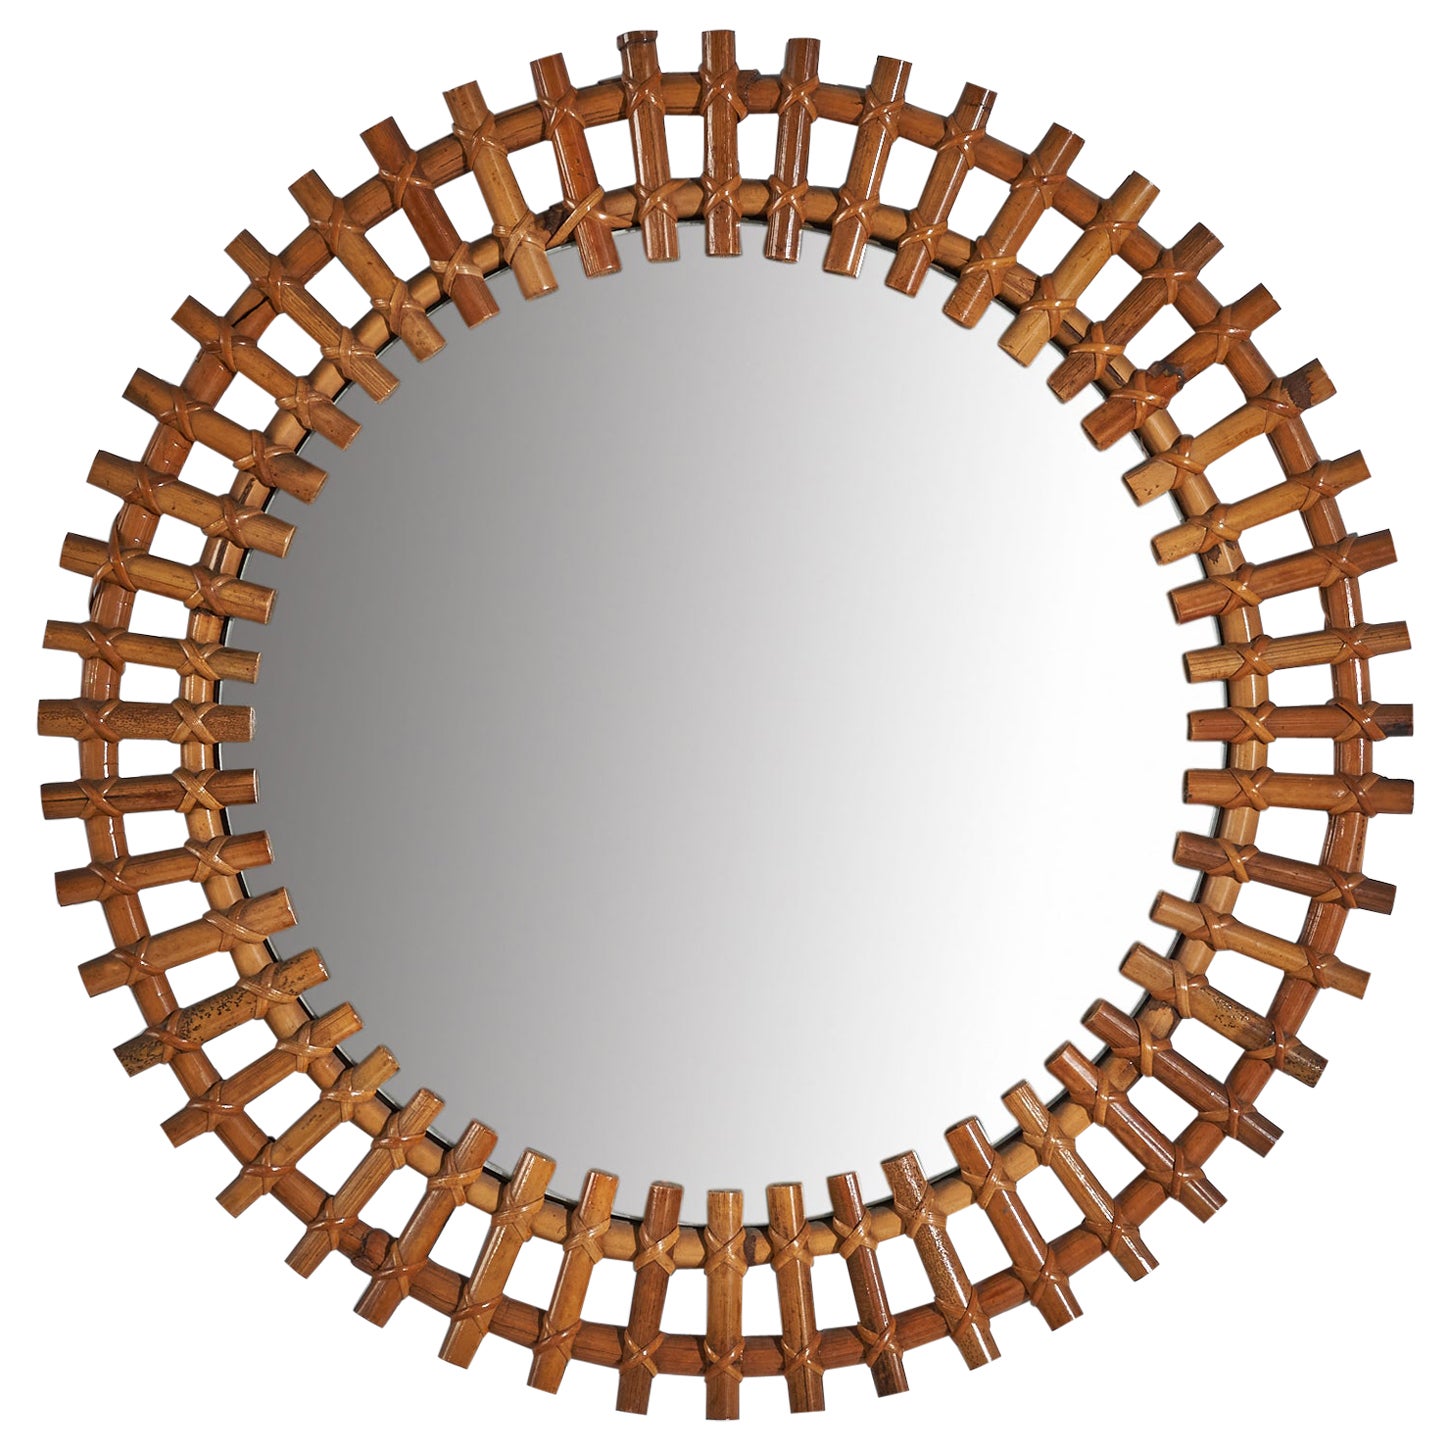 Italian Designer, Circular Wall Mirror, Rattan, Mirror Glass, Italy, c. 1950s